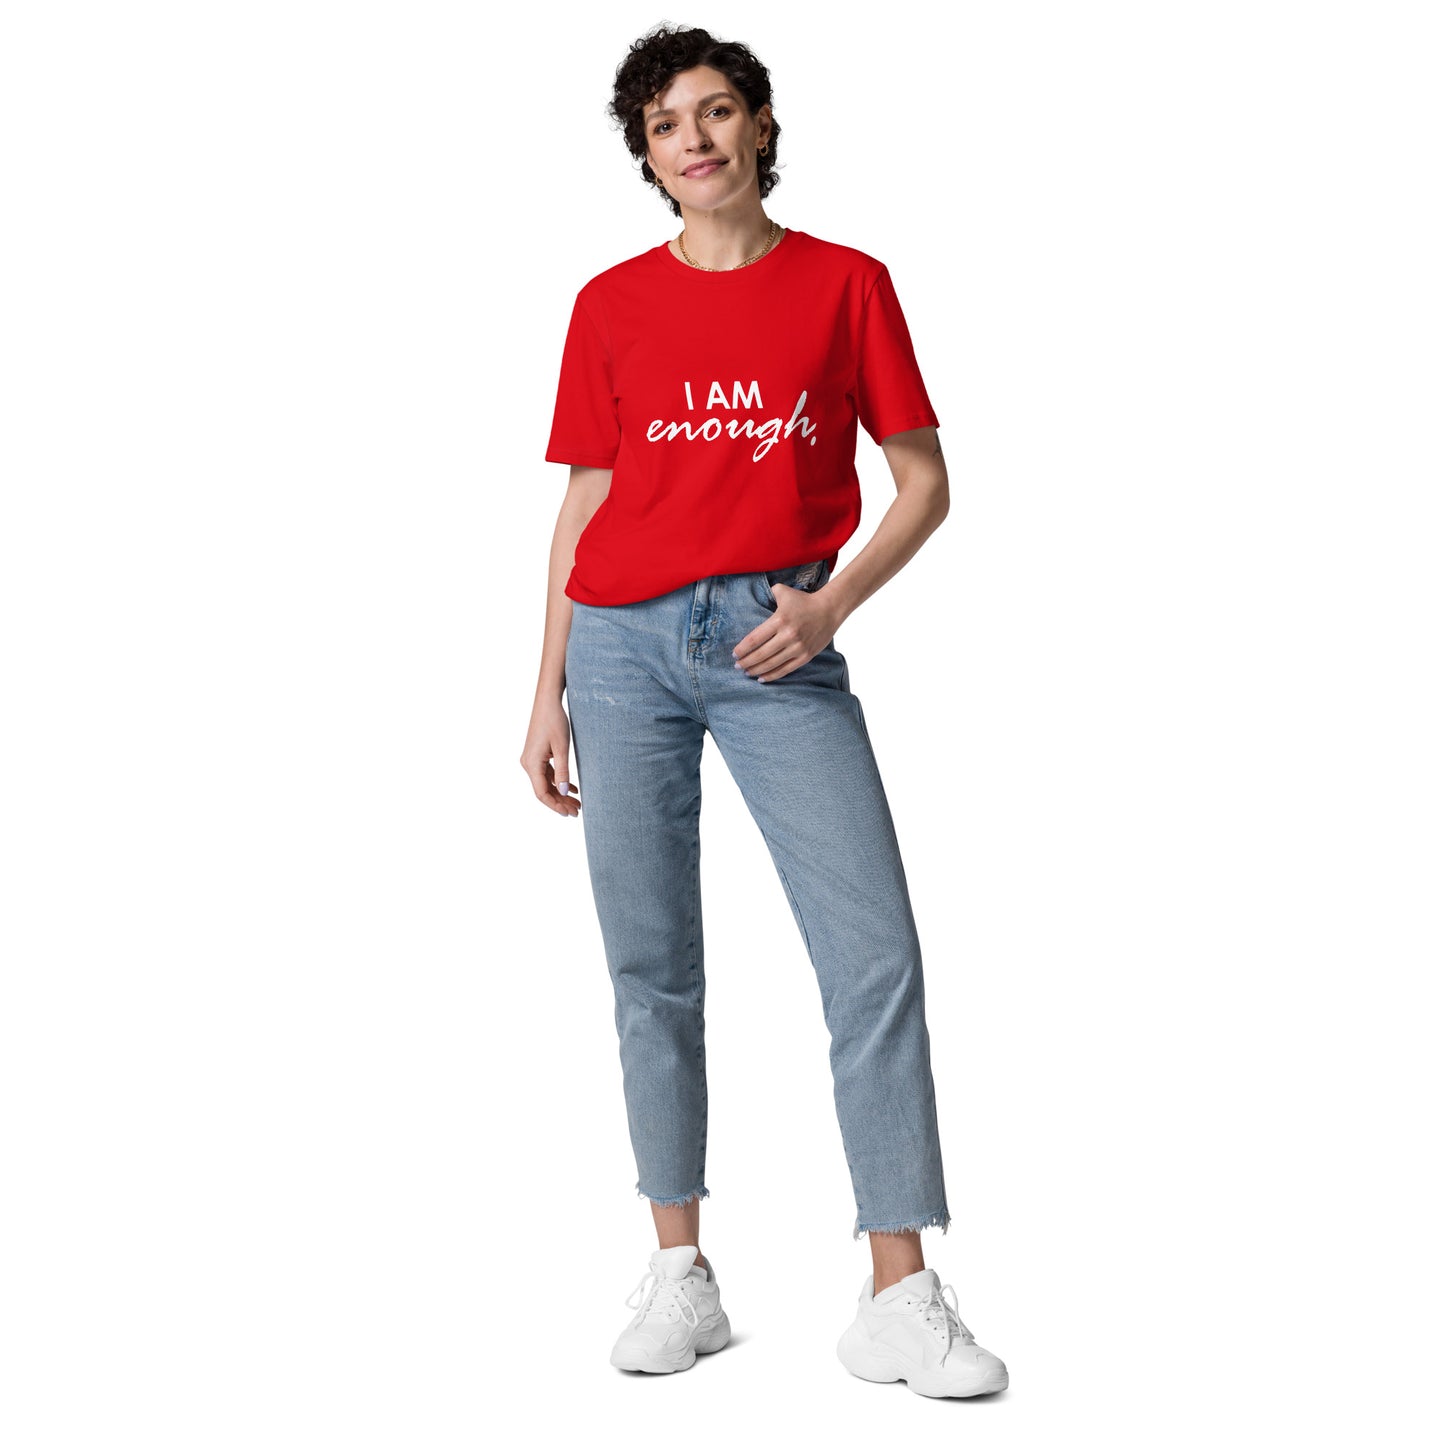 I AM ENOUGH - Unisex organic cotton t-shirt